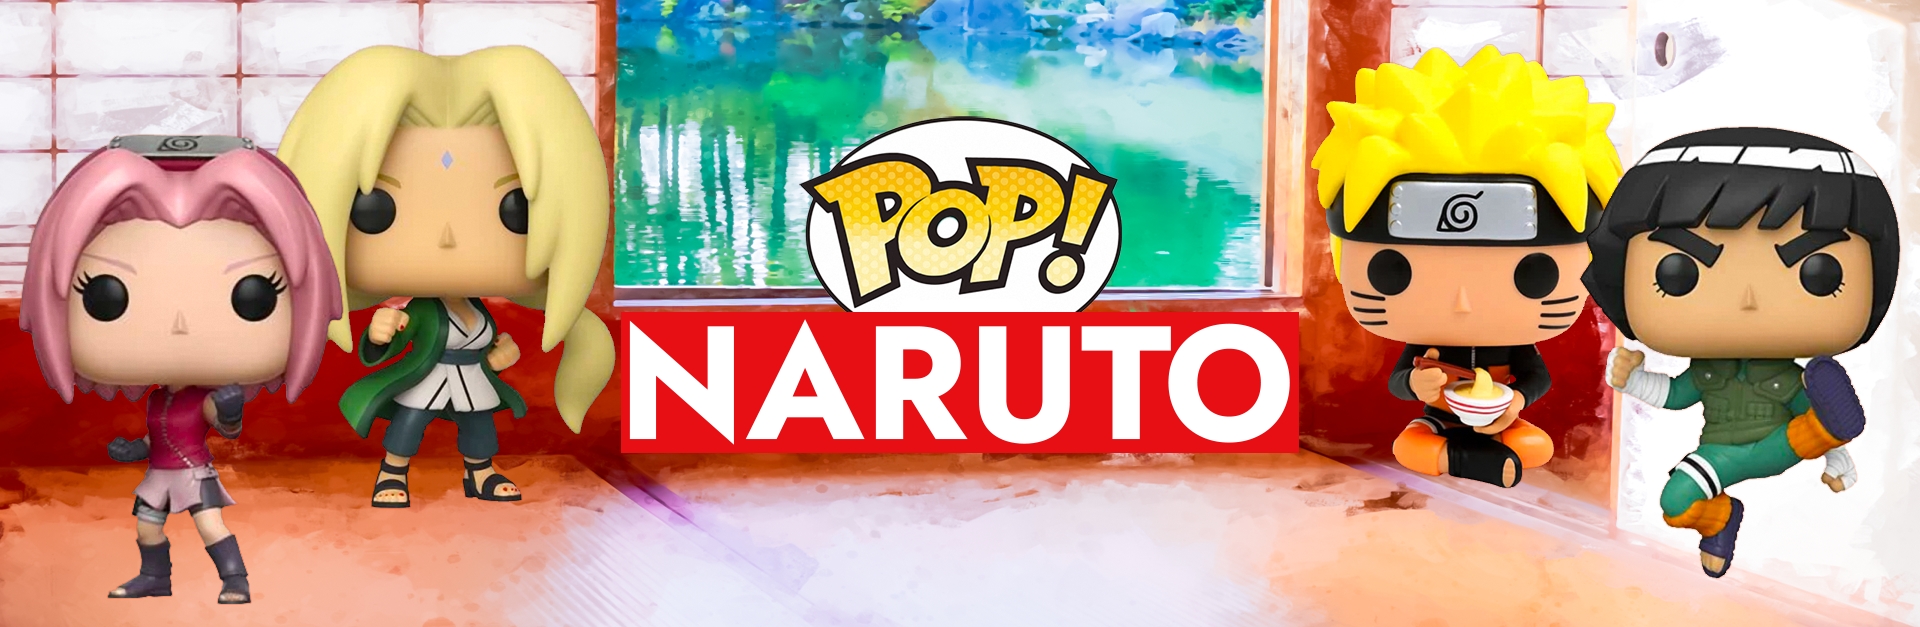 Funko Pop Naruto Shippuden Minato Namikaze Exclusive Glow in the Dark  “CHASE” Version with Special Edition Sticker.